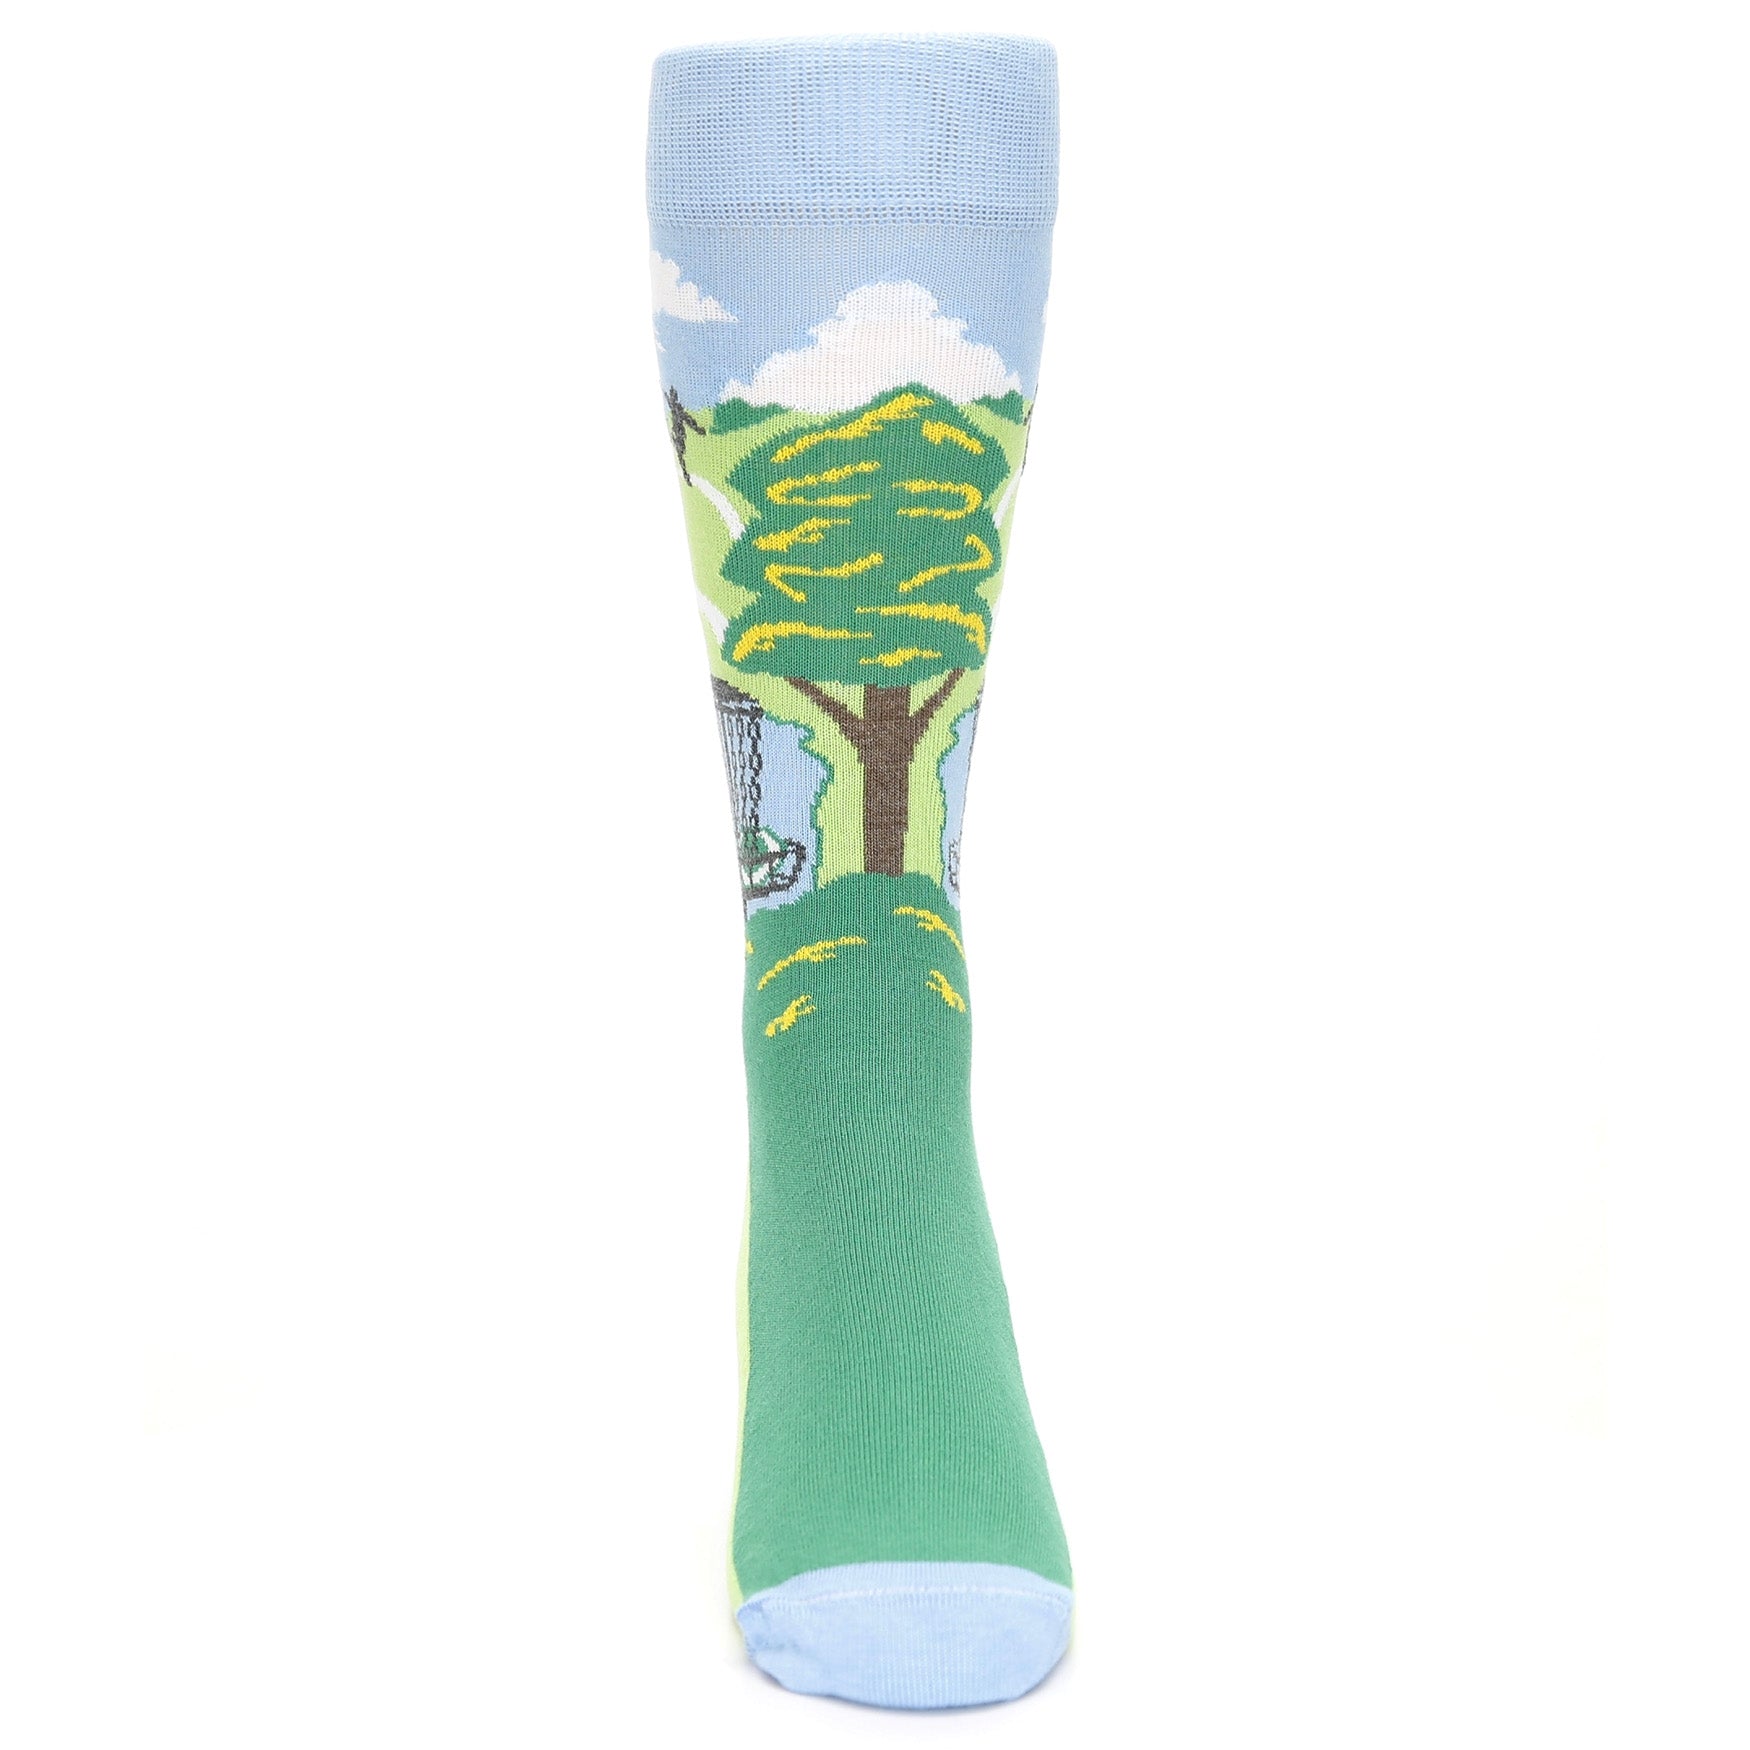 Funny Golf Socks Crazy Socks Golf Dress Socks Casual Cotton Crew Socks,  Novelty Gifts For Men, Women and Teens